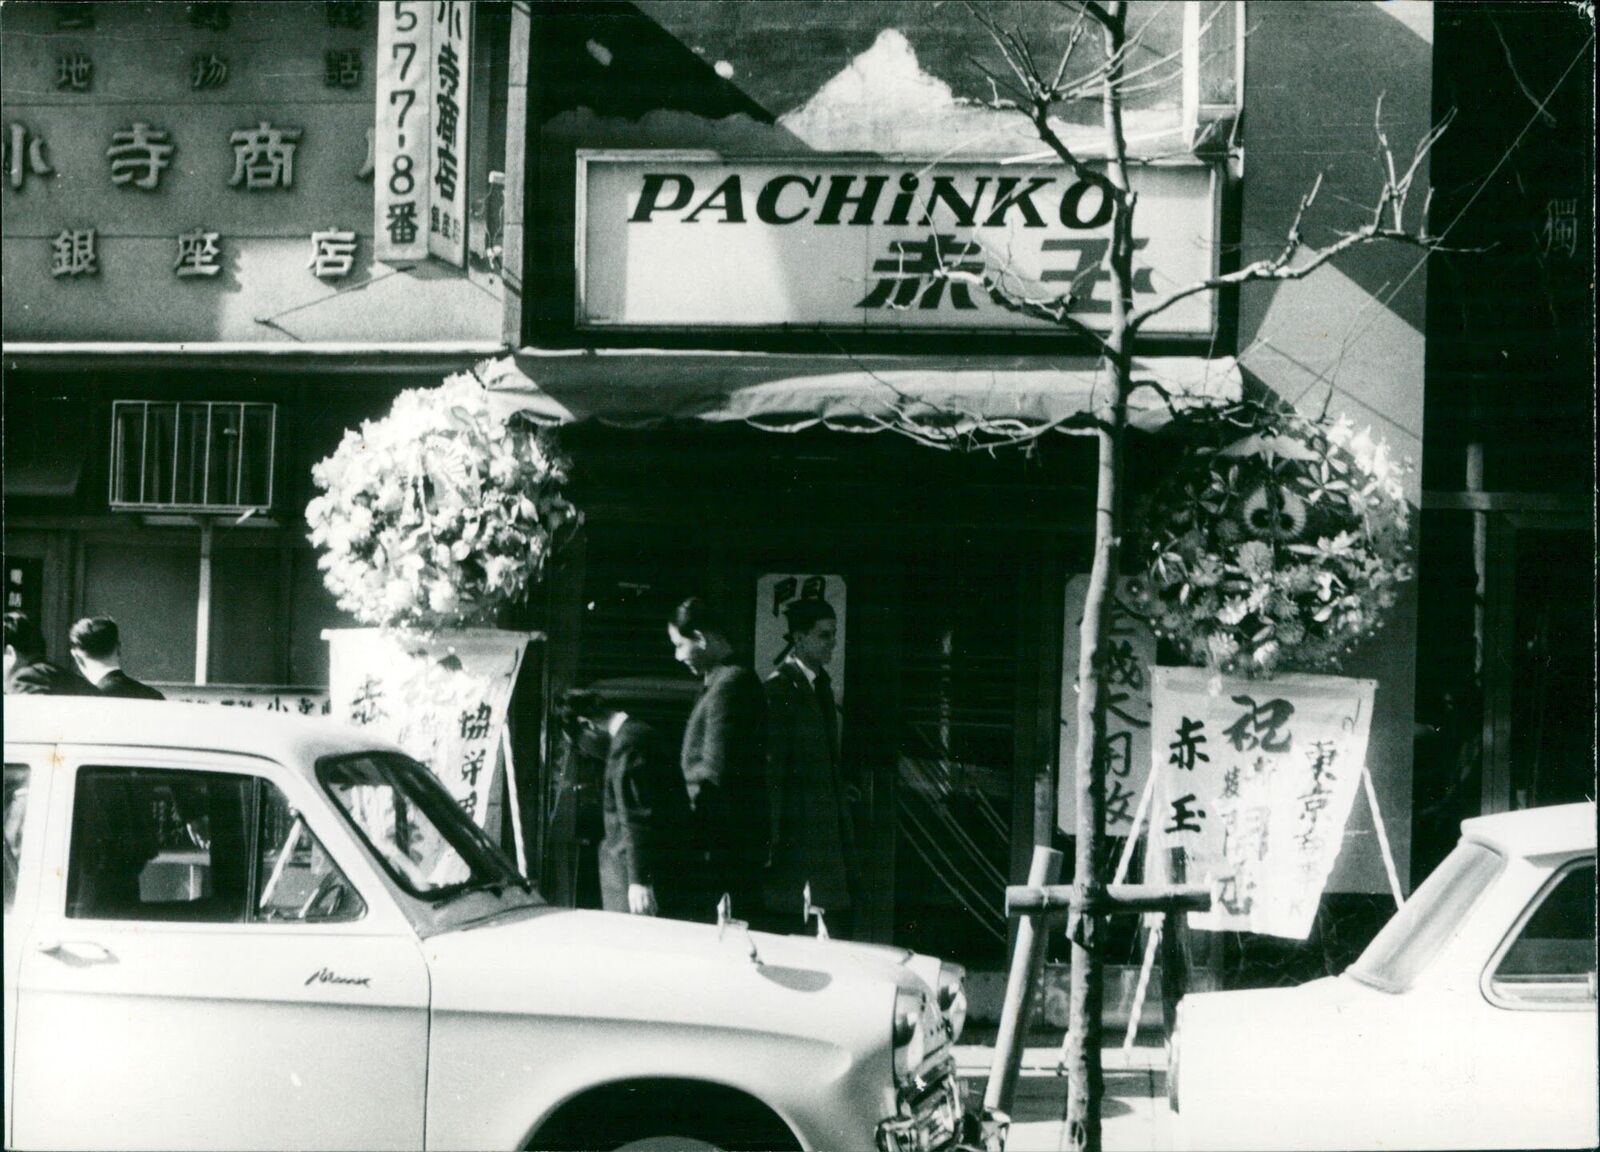 PACHINKOY PACHINKOYCOM SOCIAL NETWORKING SITE F... - Vintage Photograph 3775776